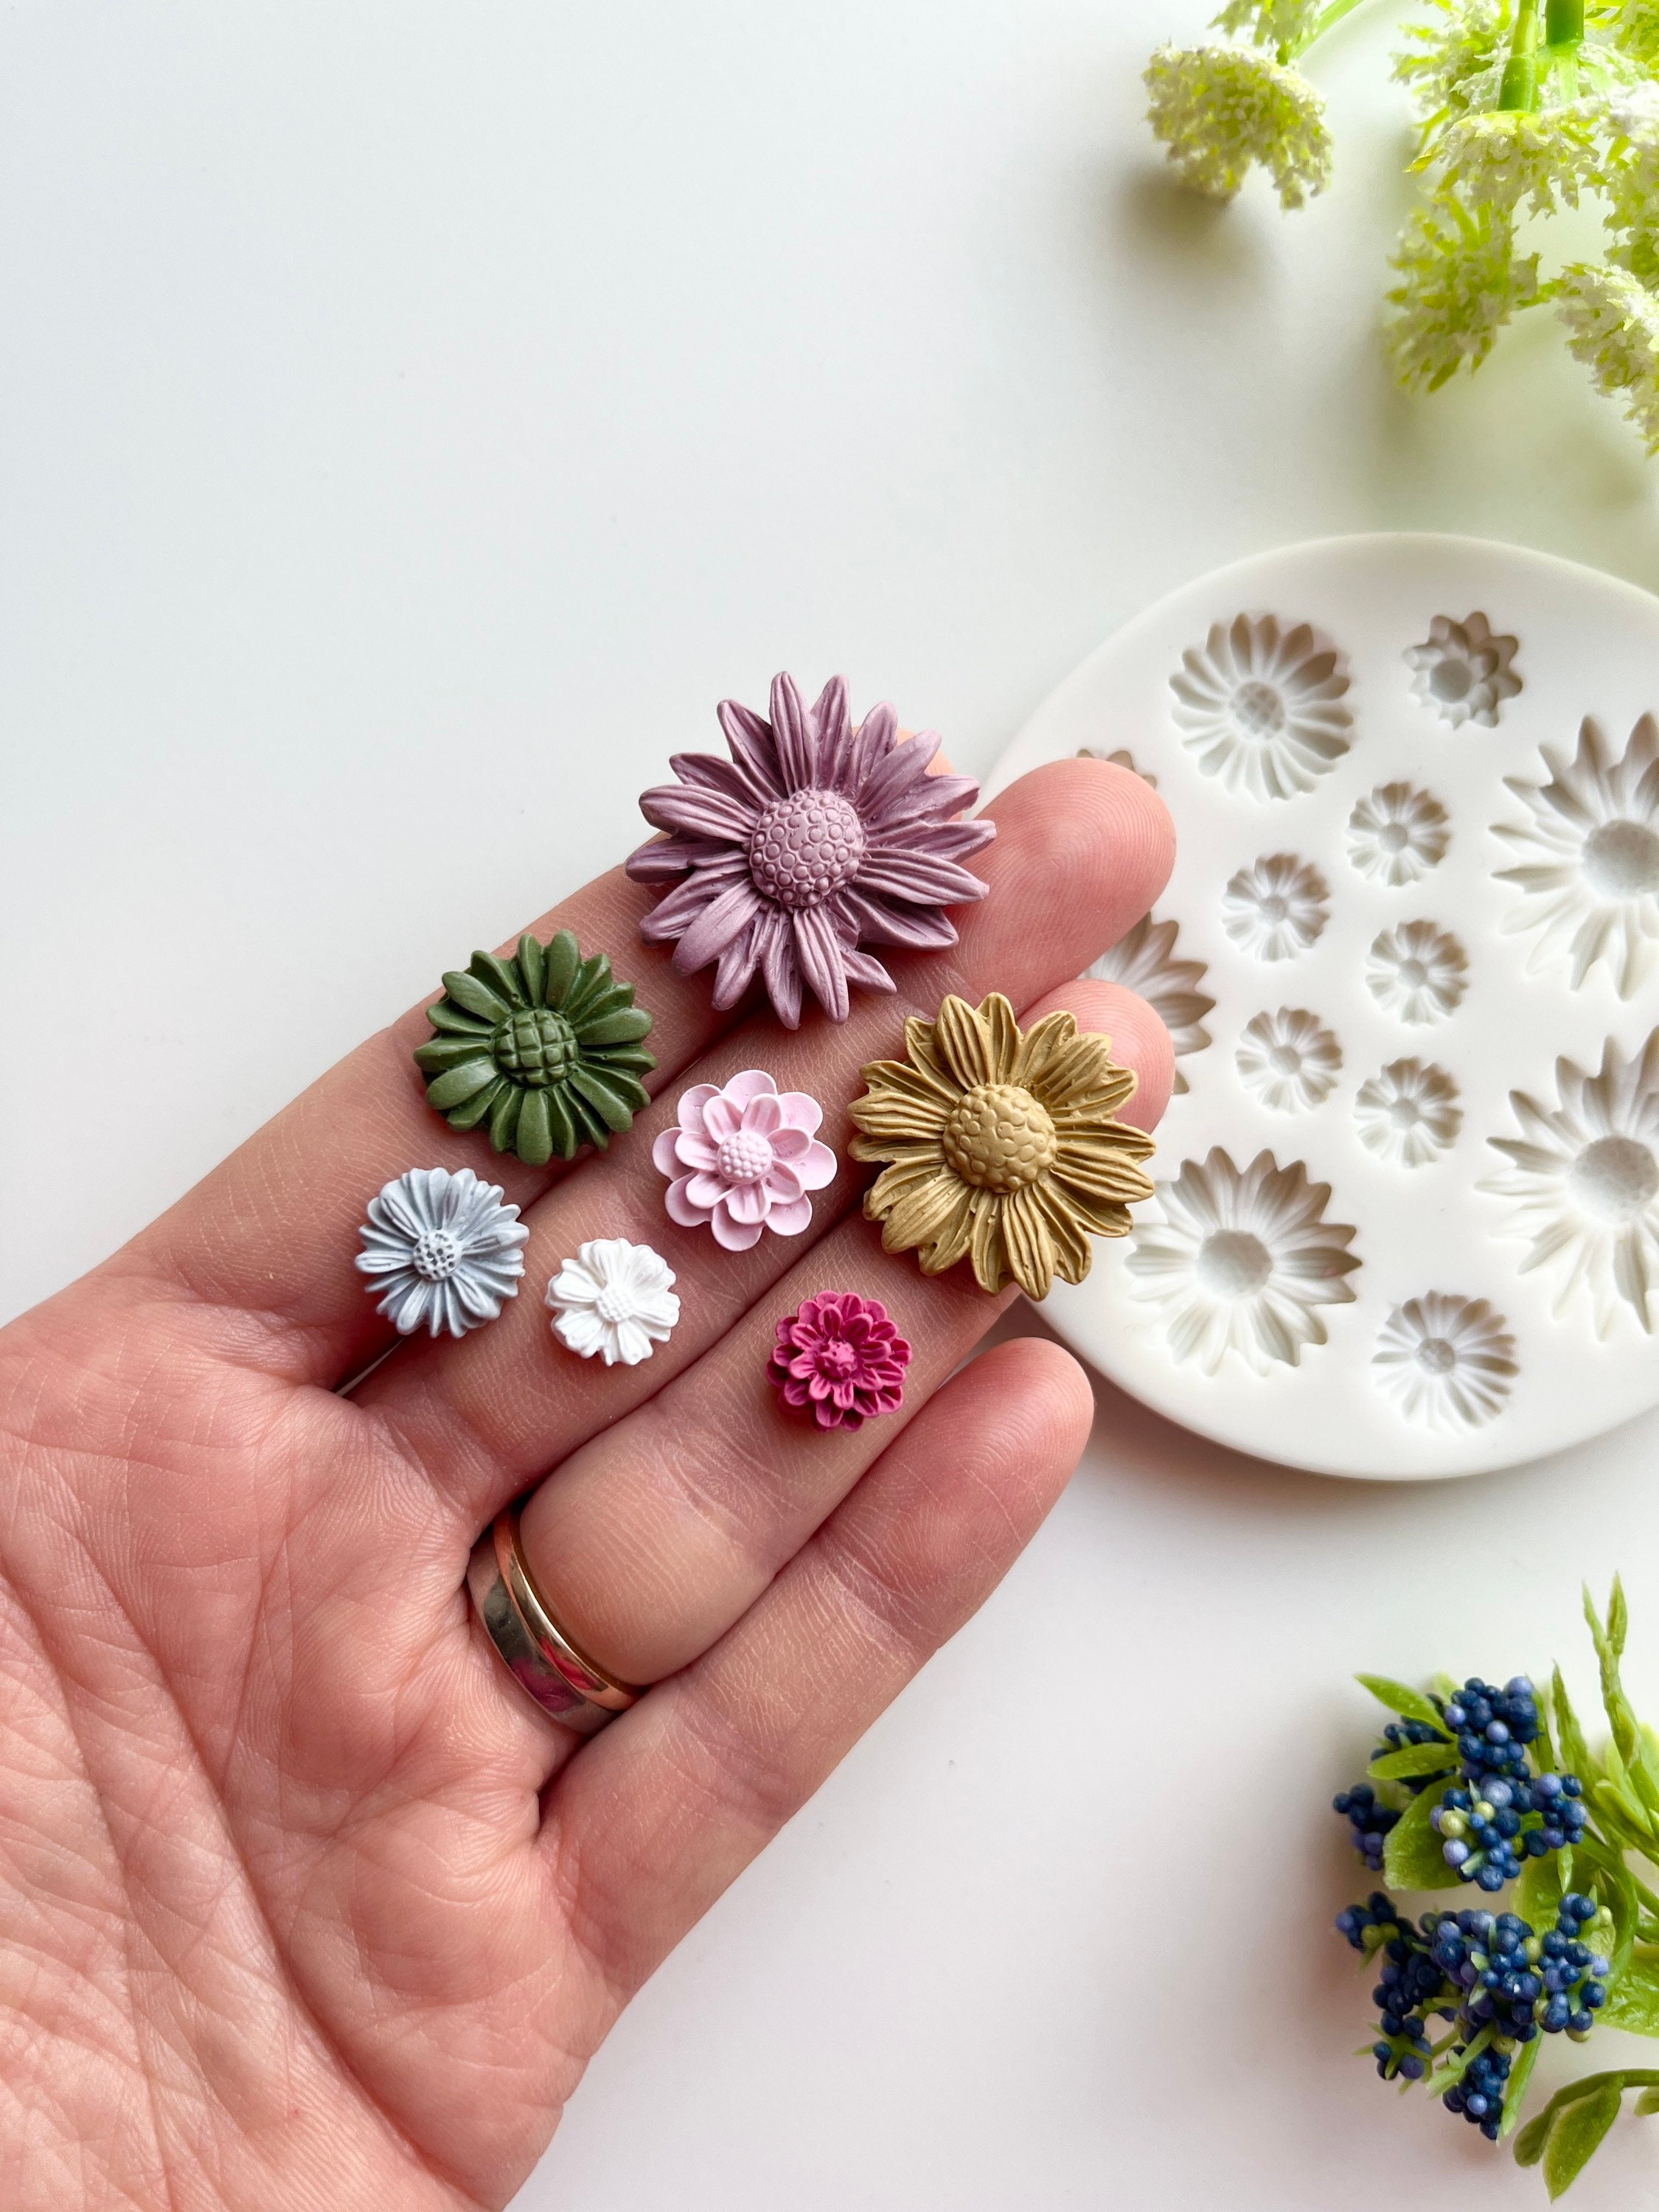 KEOKER Moldes de arcilla polimérica de flores, 4 moldes de arcilla  polimérica floral para fabricación de joyas, moldes de arcilla en  miniatura, moldes